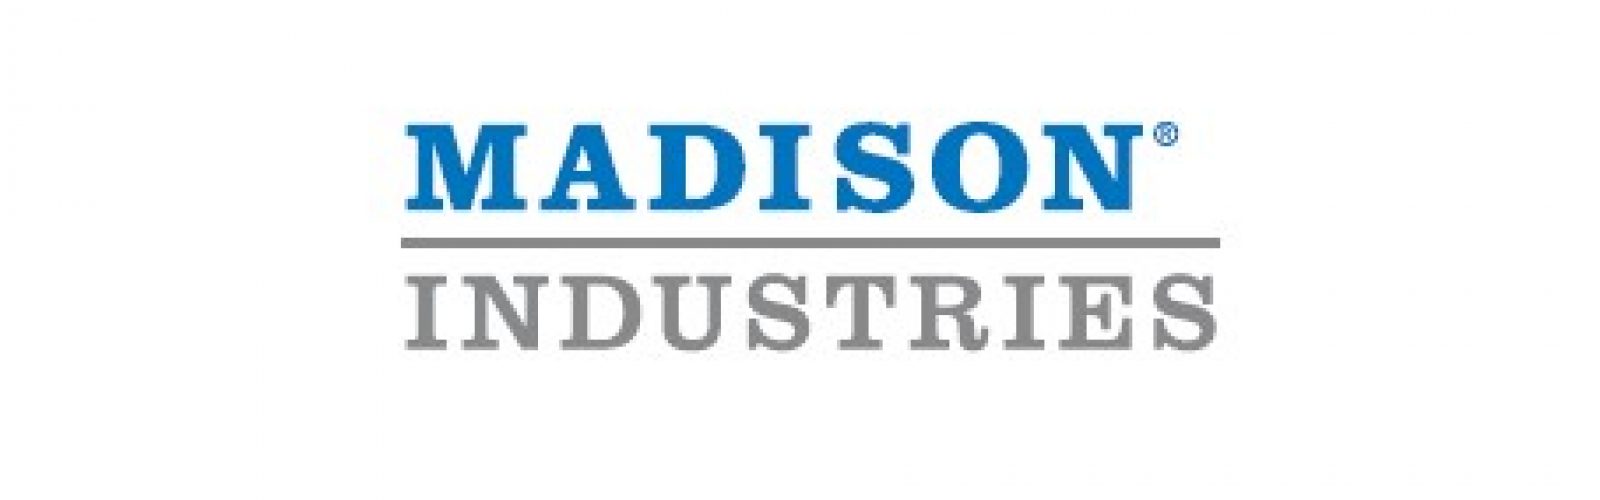 Madison Industries Logo Large Square